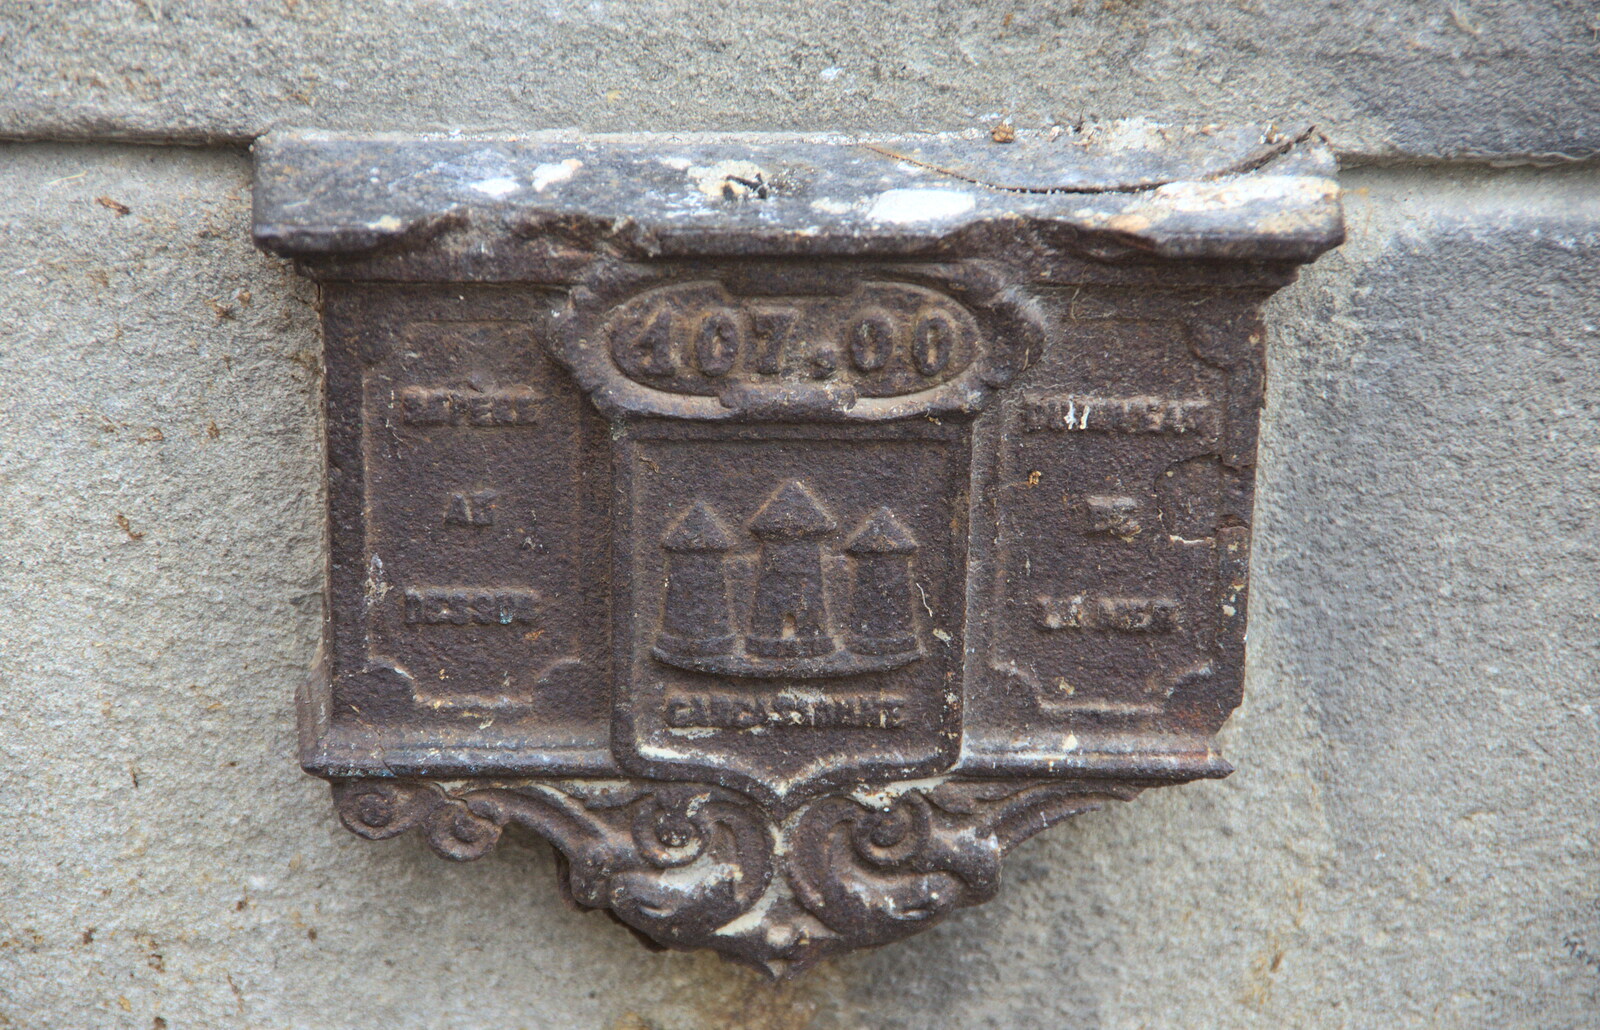 Nice City of Carcassonne cast-iron-work from Abbaye Sainte-Marie de Lagrasse and The Lac de la Cavayère, Aude, France - 10th August